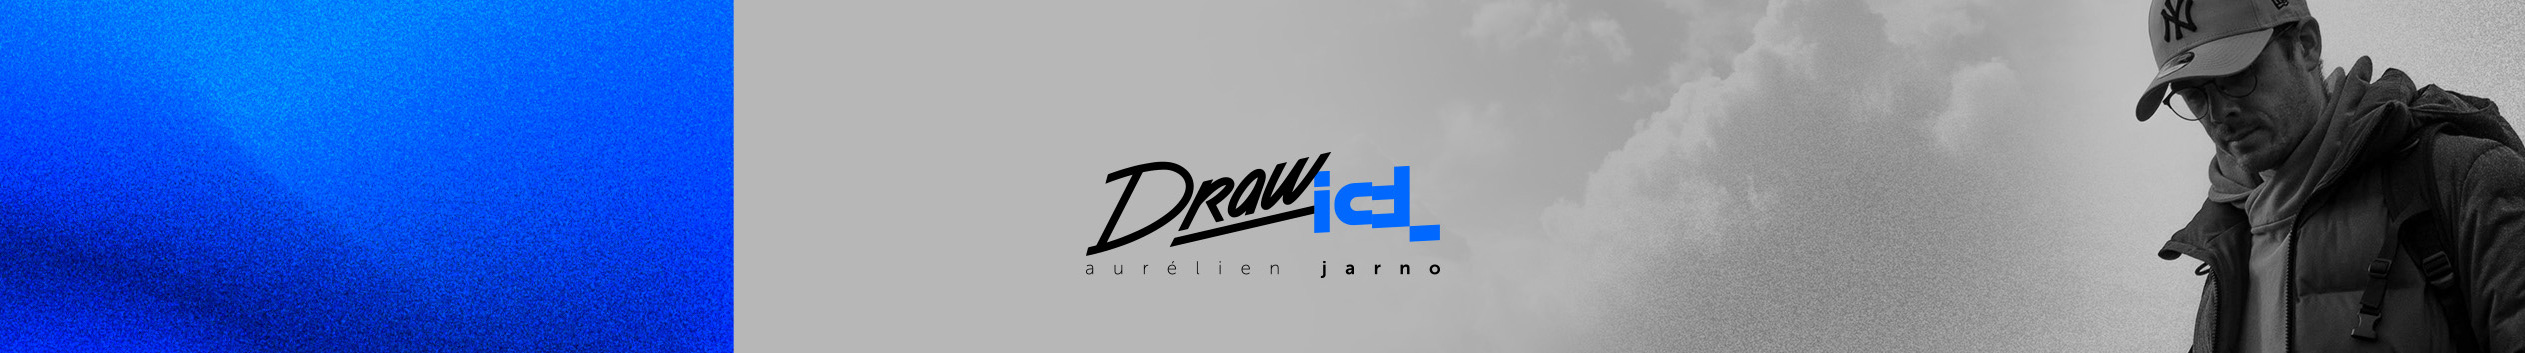 DRAWID - Aurélien Jarno's profile banner